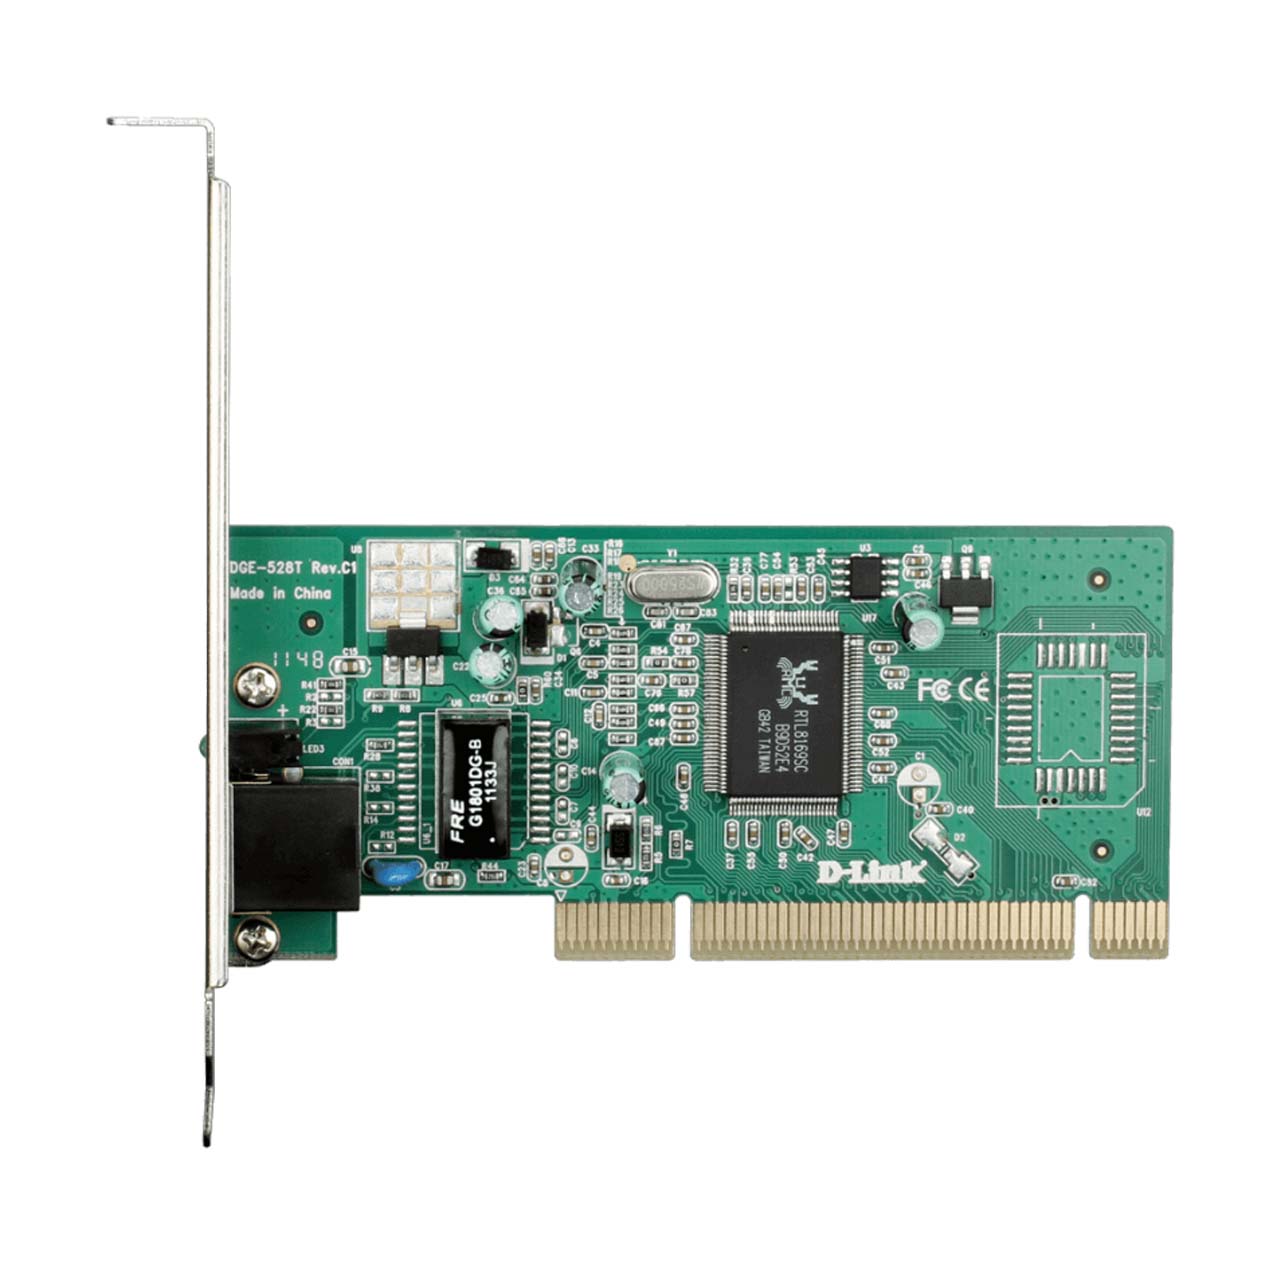 کارت شبکه گیگابیتی برند DLINK مدل DGE-528T 

D-Link DGE-528T Copper Gigabit PCI Card for PC